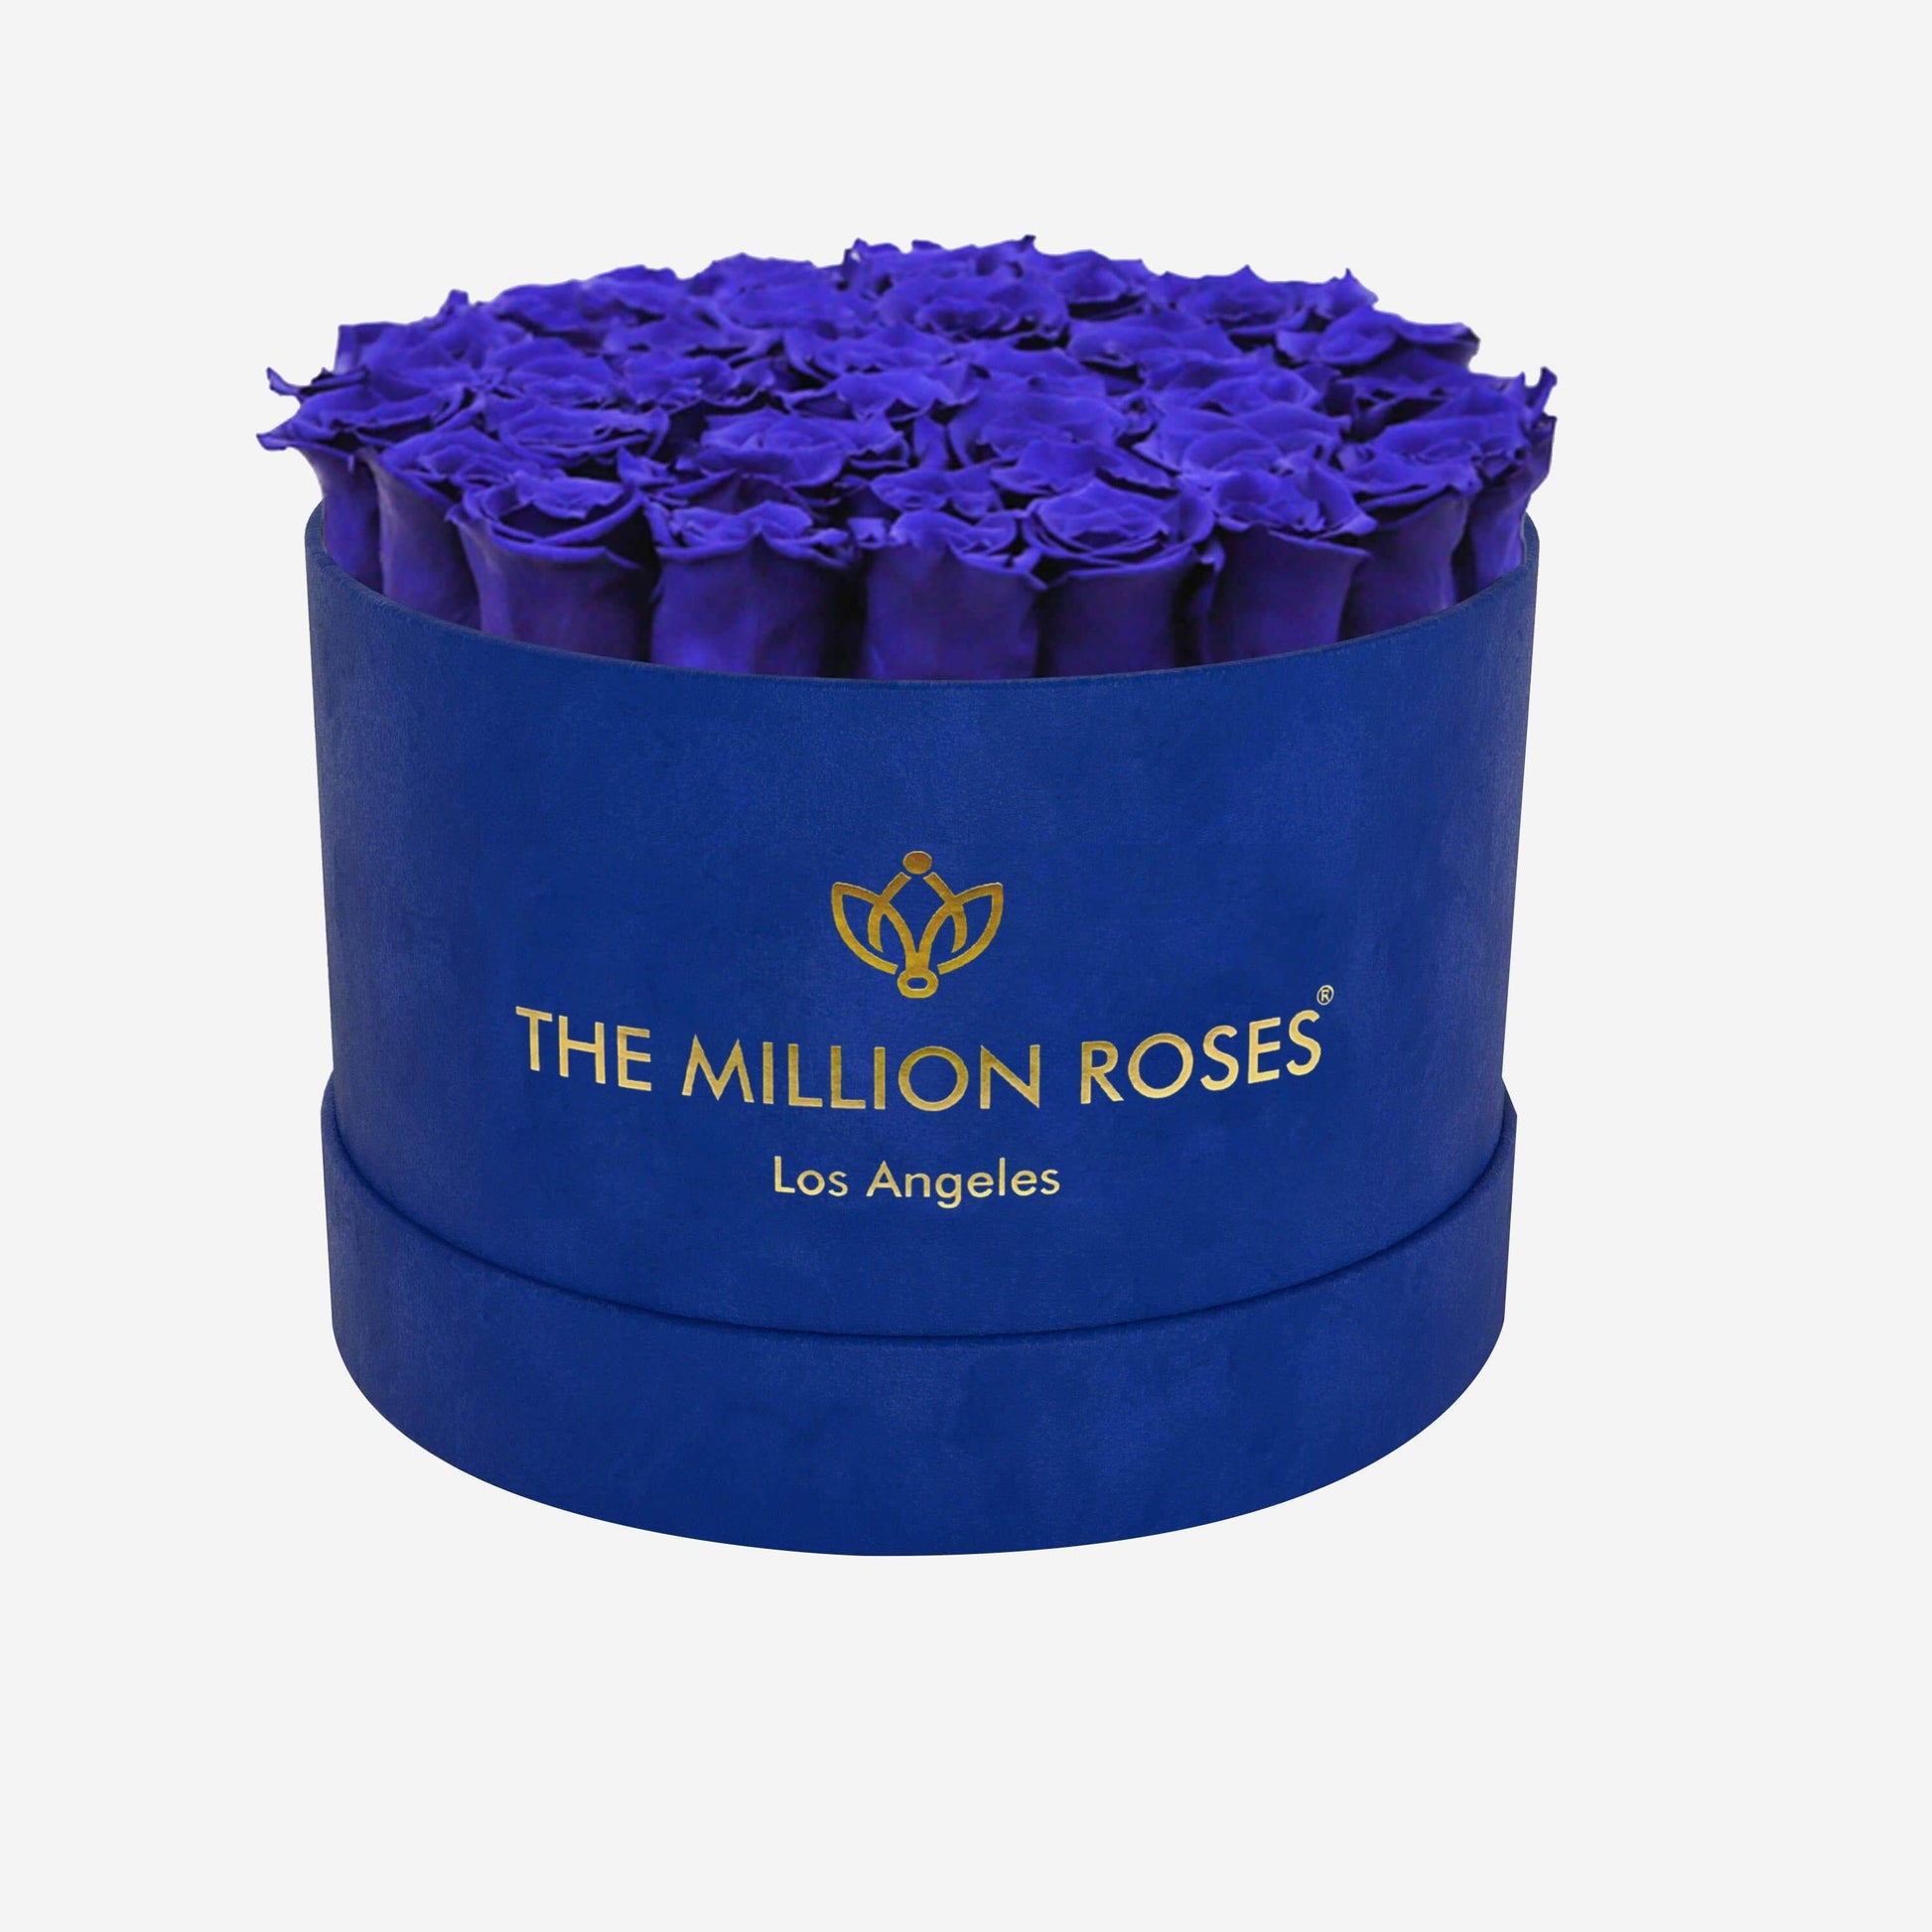 Supreme Royal Blue Suede Box | Royal Blue Roses - The Million Roses